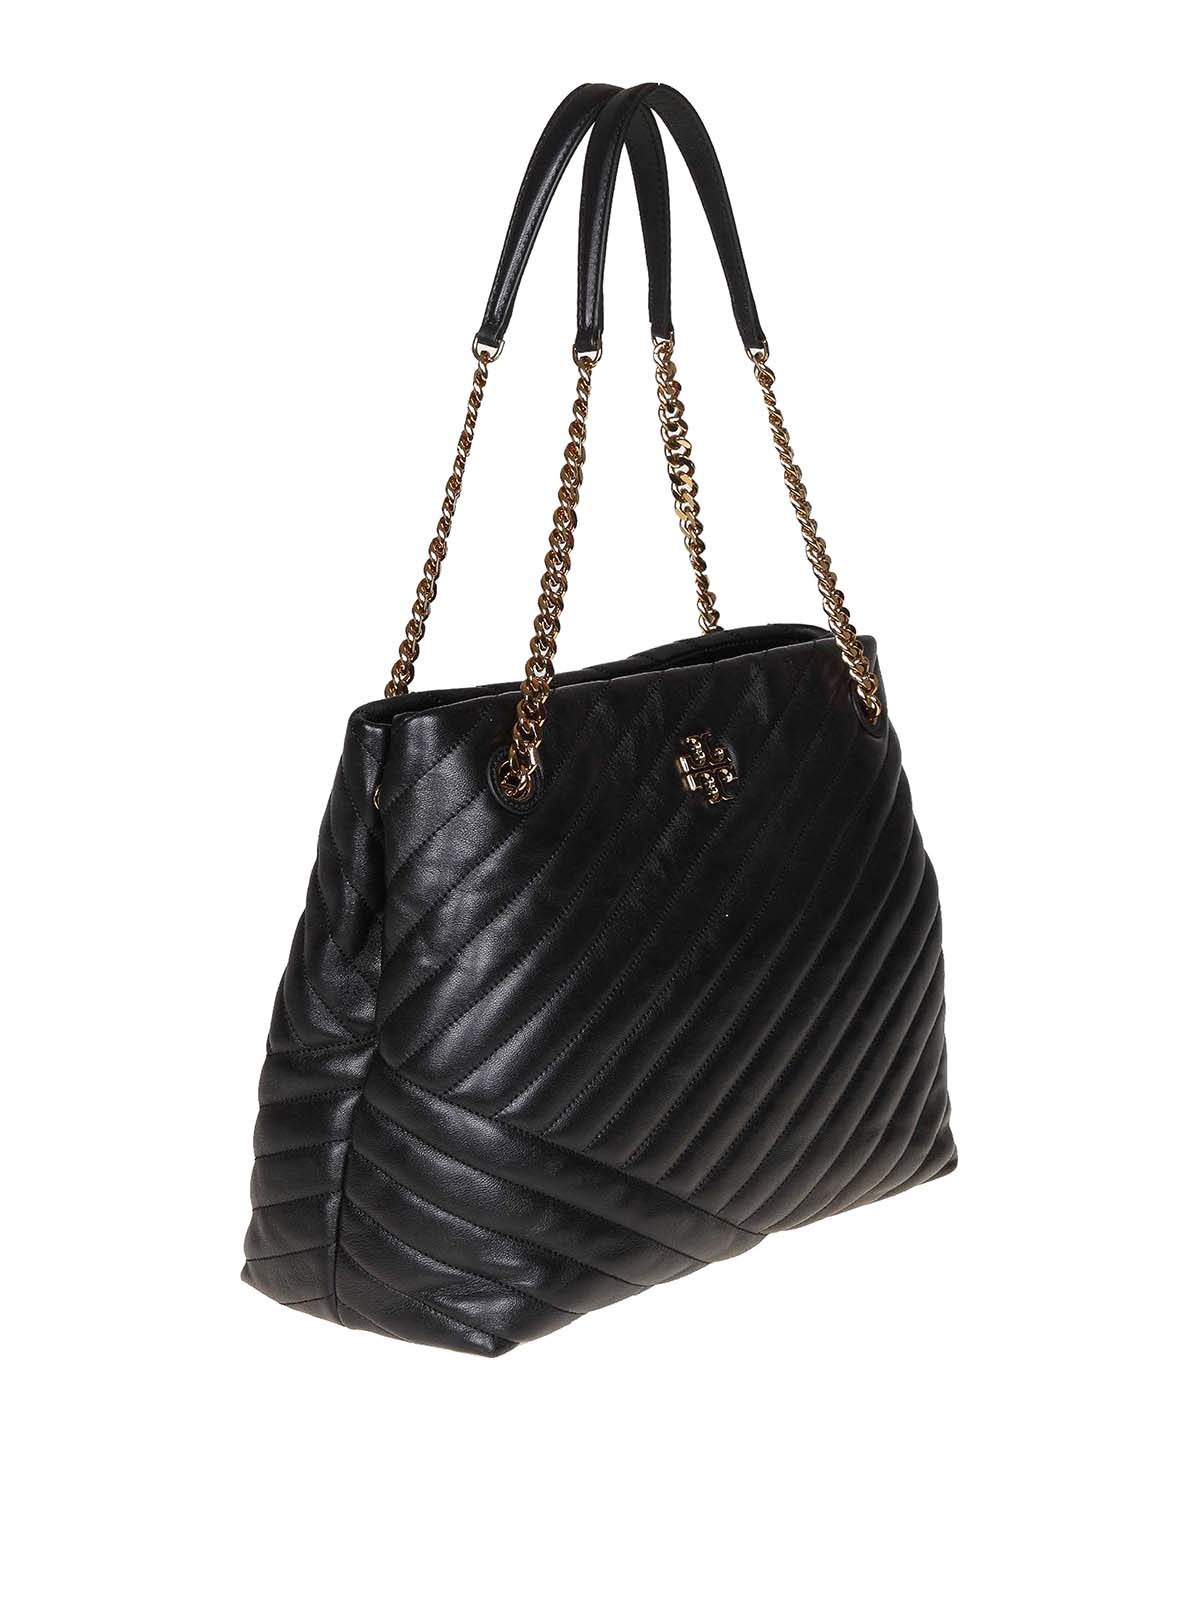 Shoulder bags Tory Burch - Kira Chevron black leather bag - 56757001